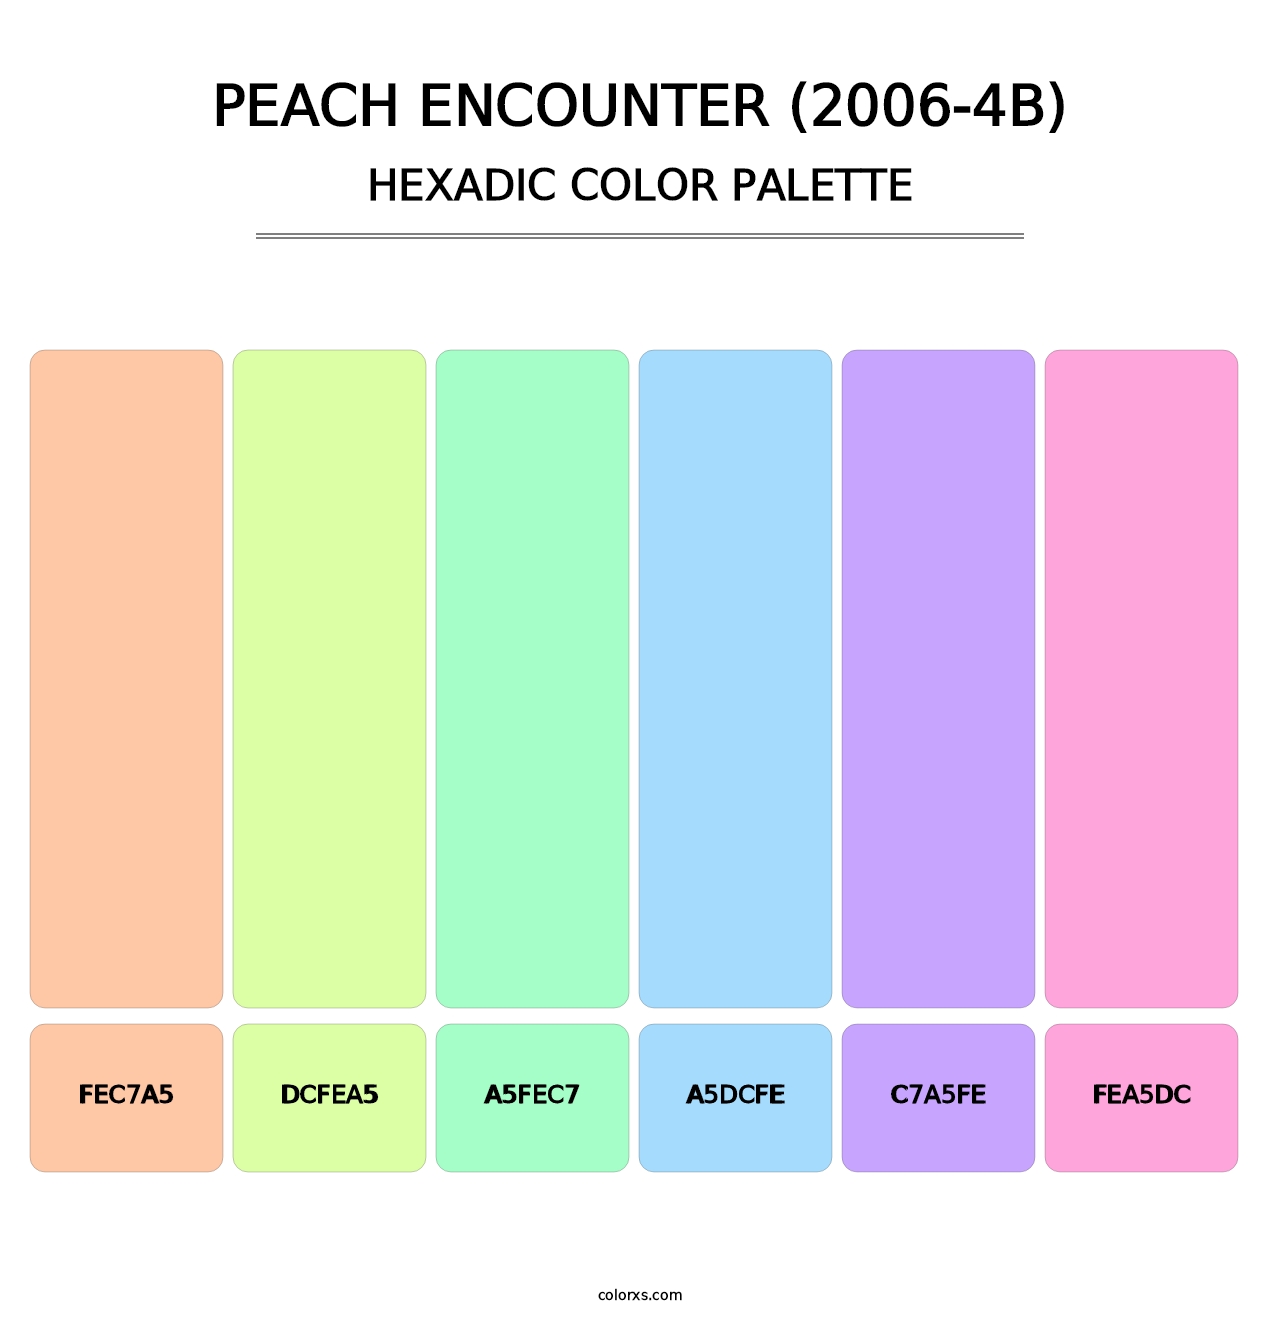 Peach Encounter (2006-4B) - Hexadic Color Palette